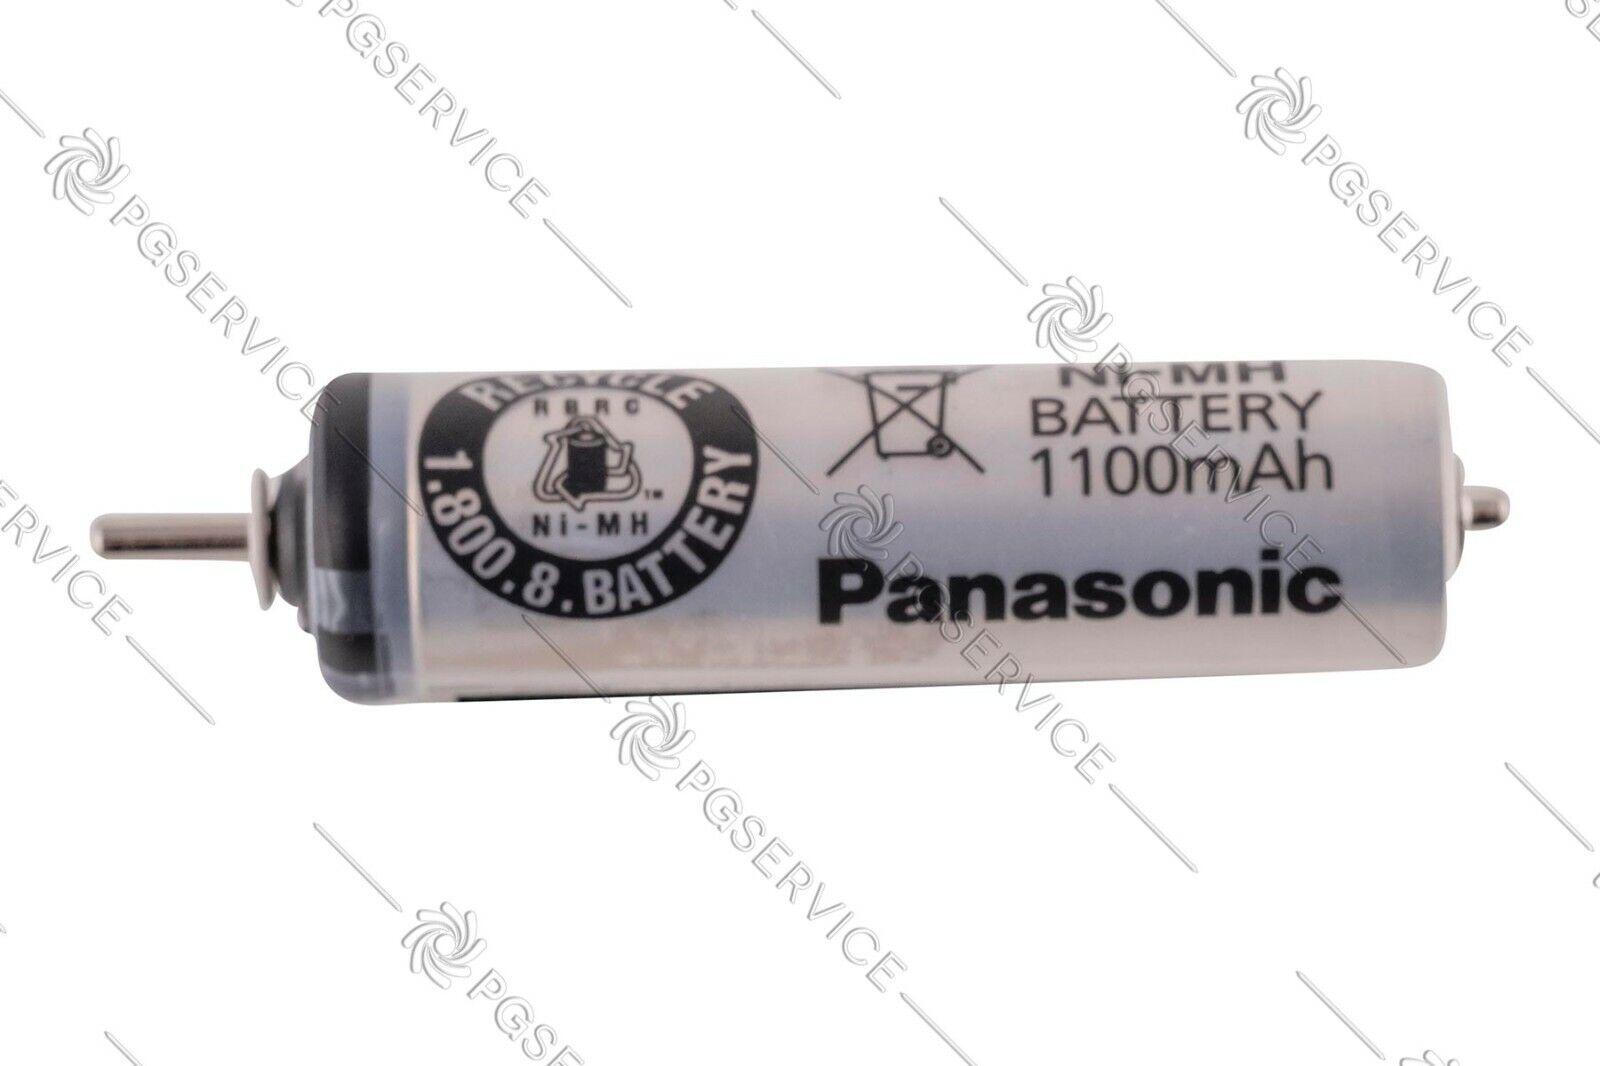 Panasonic batteria ricaricabile Ni-Mh 1100mAh 1.2V 61.5mm idropulsore EW1211